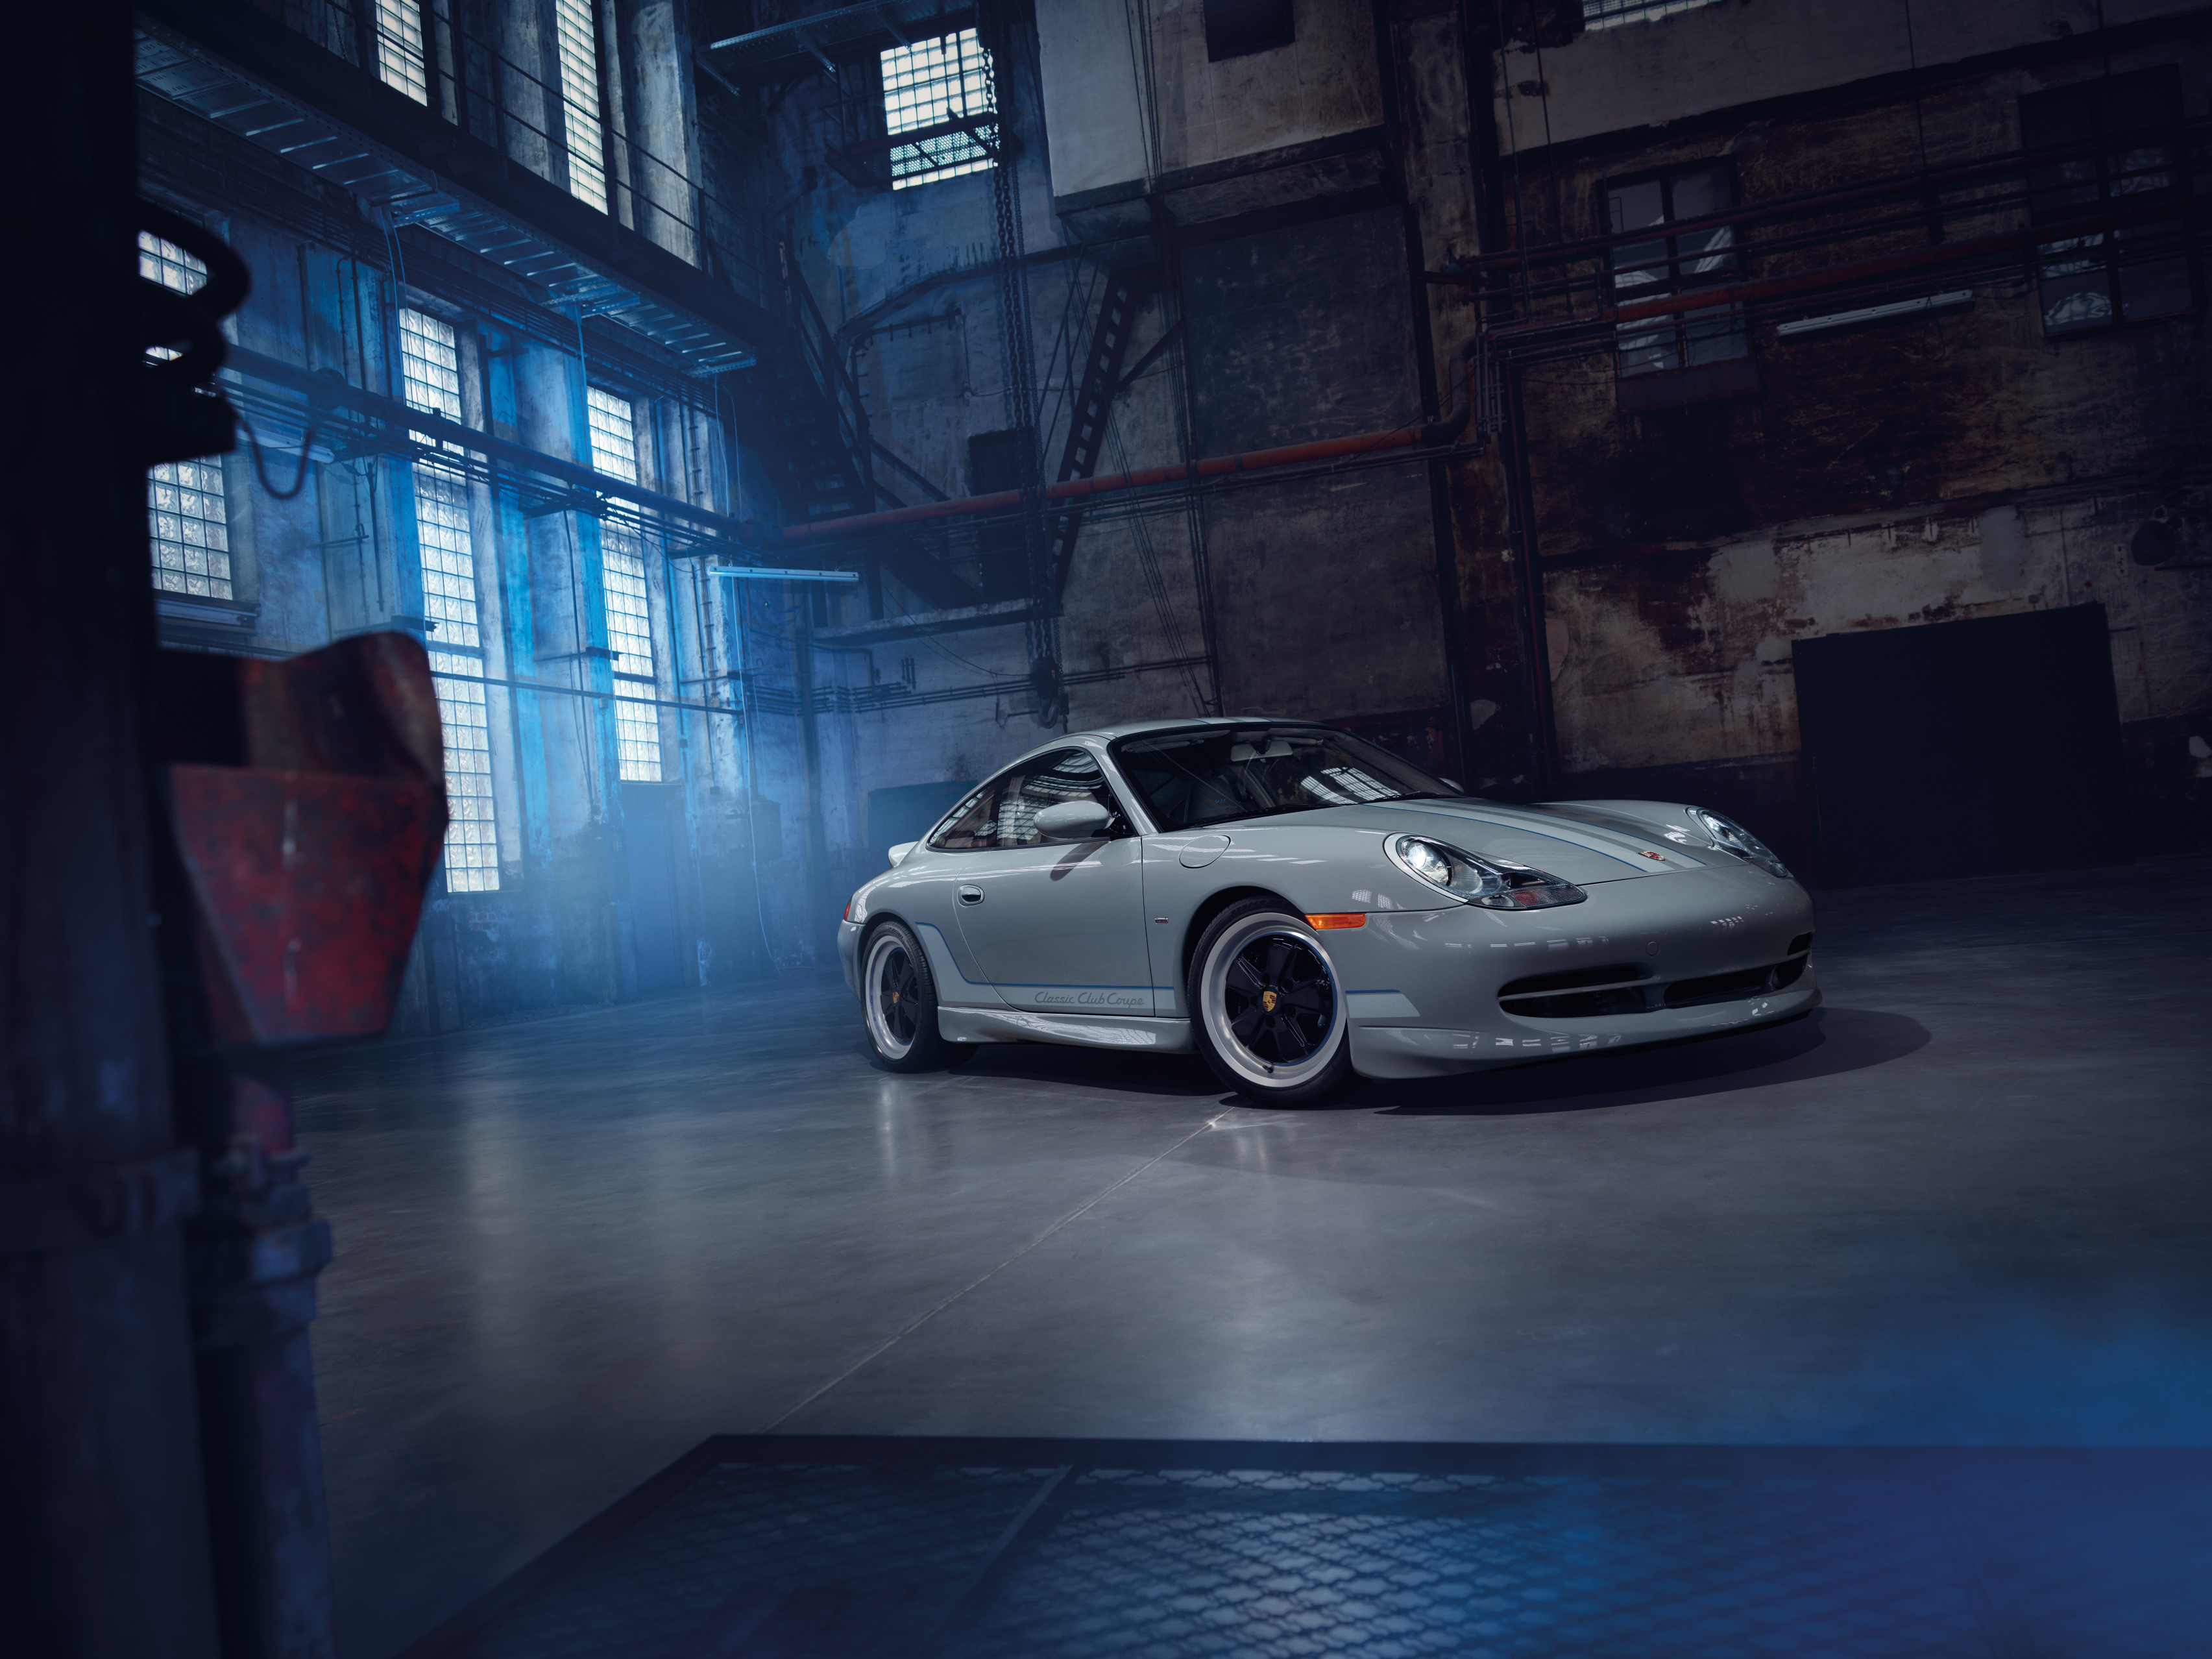 Porsche 911 Classic Club Coupe in dark, industrial warehouse